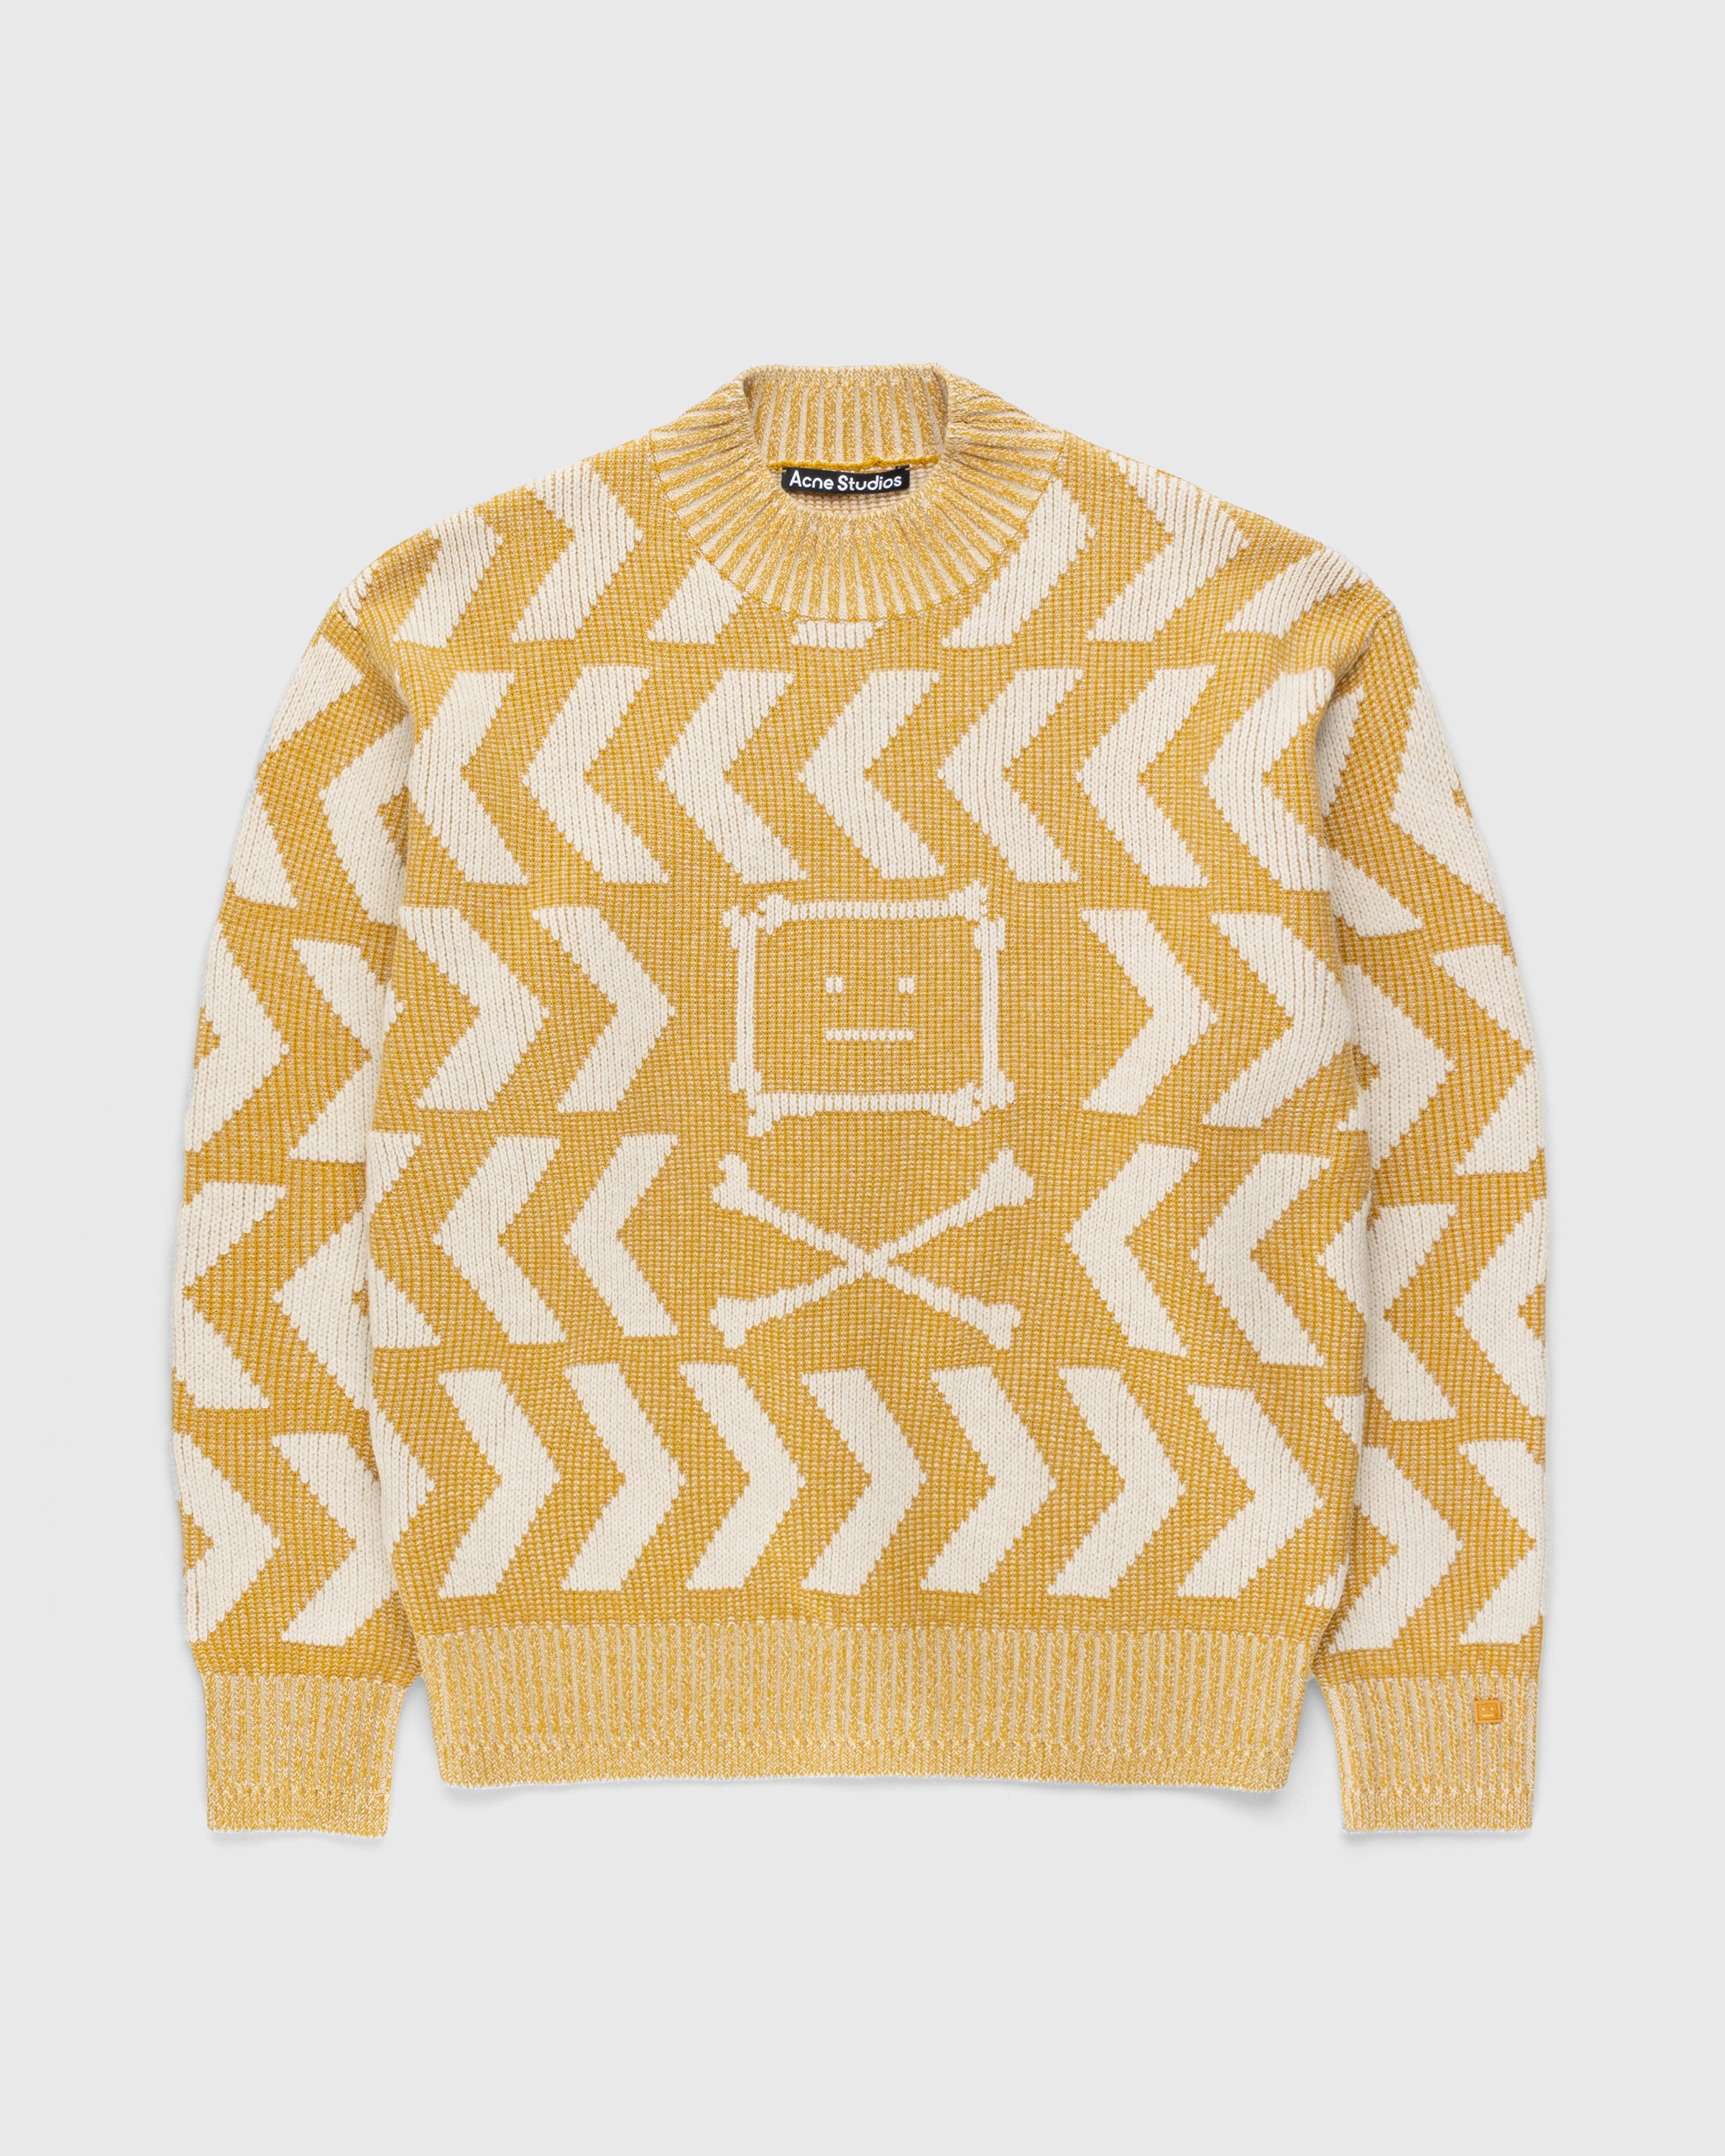 Acne Studios - Face Crossbones and Arrow Crewneck Sweater Yellow - Clothing - Yellow - Image 1